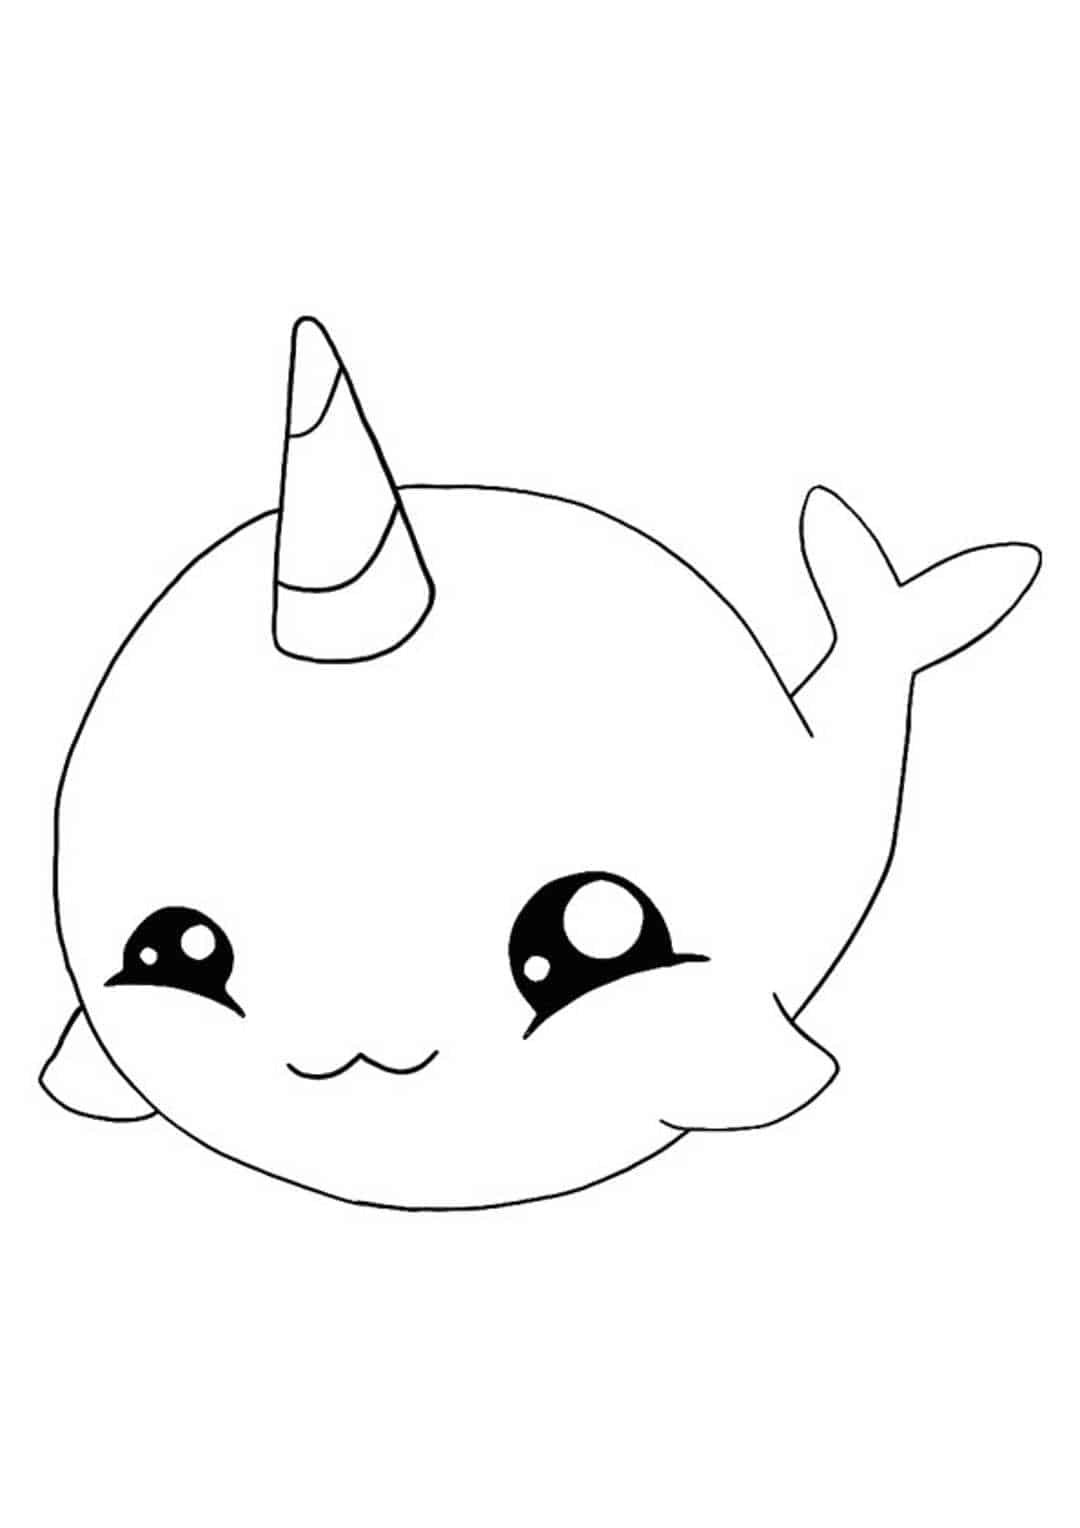 Cute Kawaii Fish Unicorn coloring page